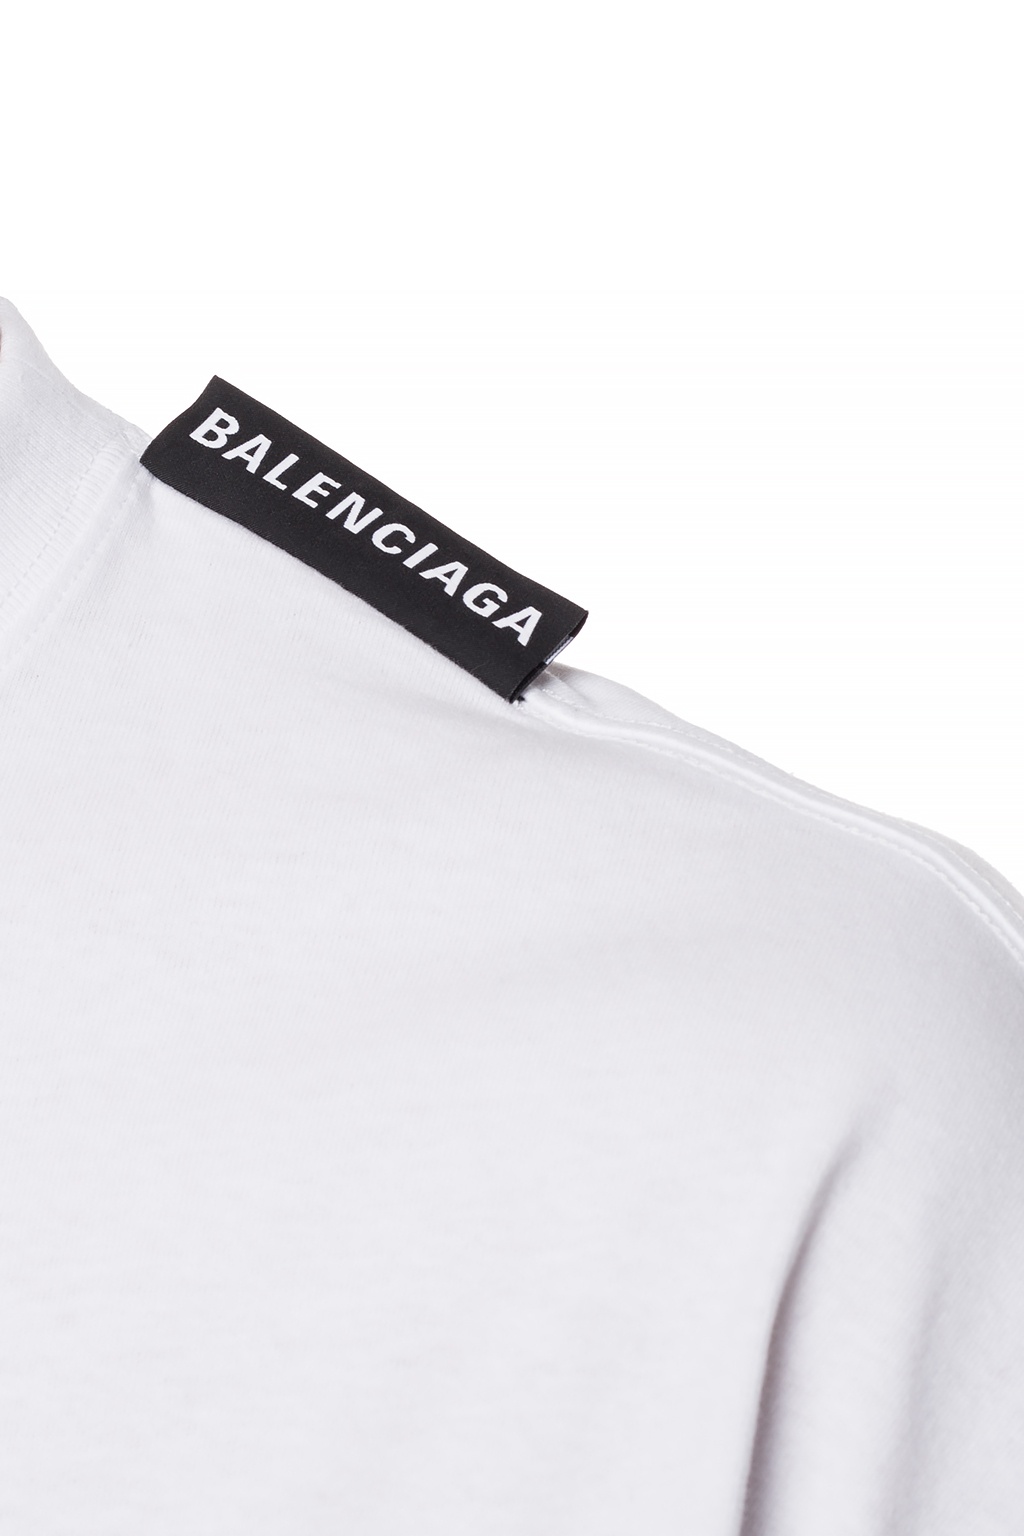 SOLD  Royal Blue Balenciaga Back Logo TShirt  Balenciaga shirt T shirt  label Clothes design